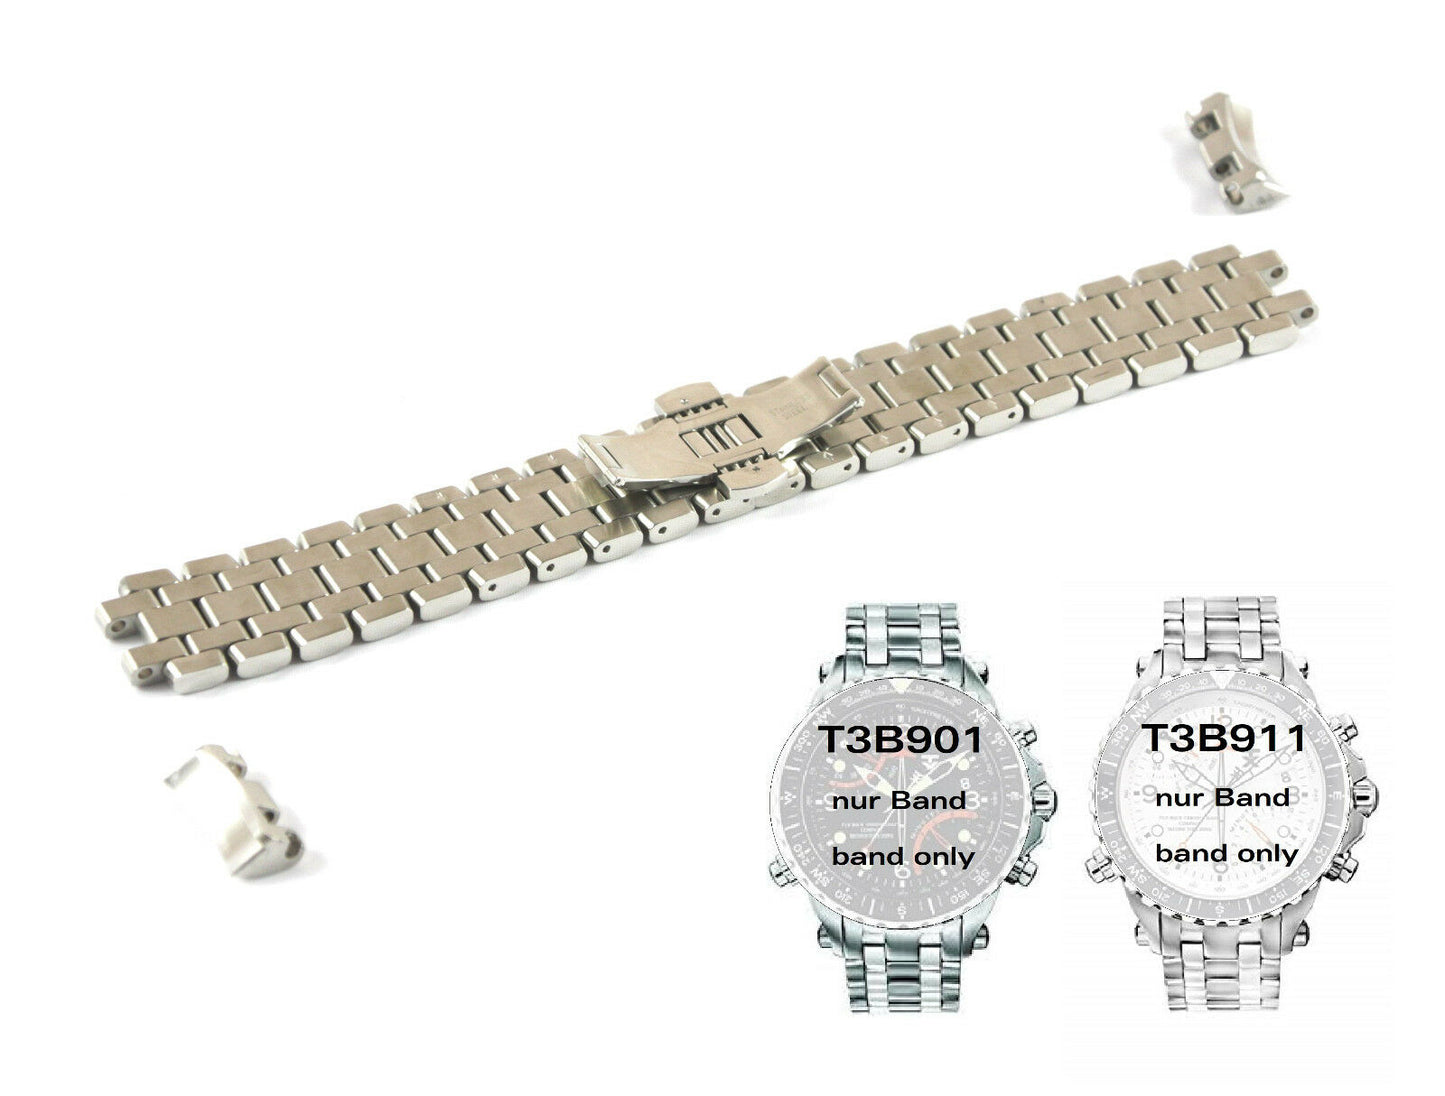 Timex TX Ersatzarmband T3B901 - passt TX 730 Serie - Ersatzband Edelstahl 20mm